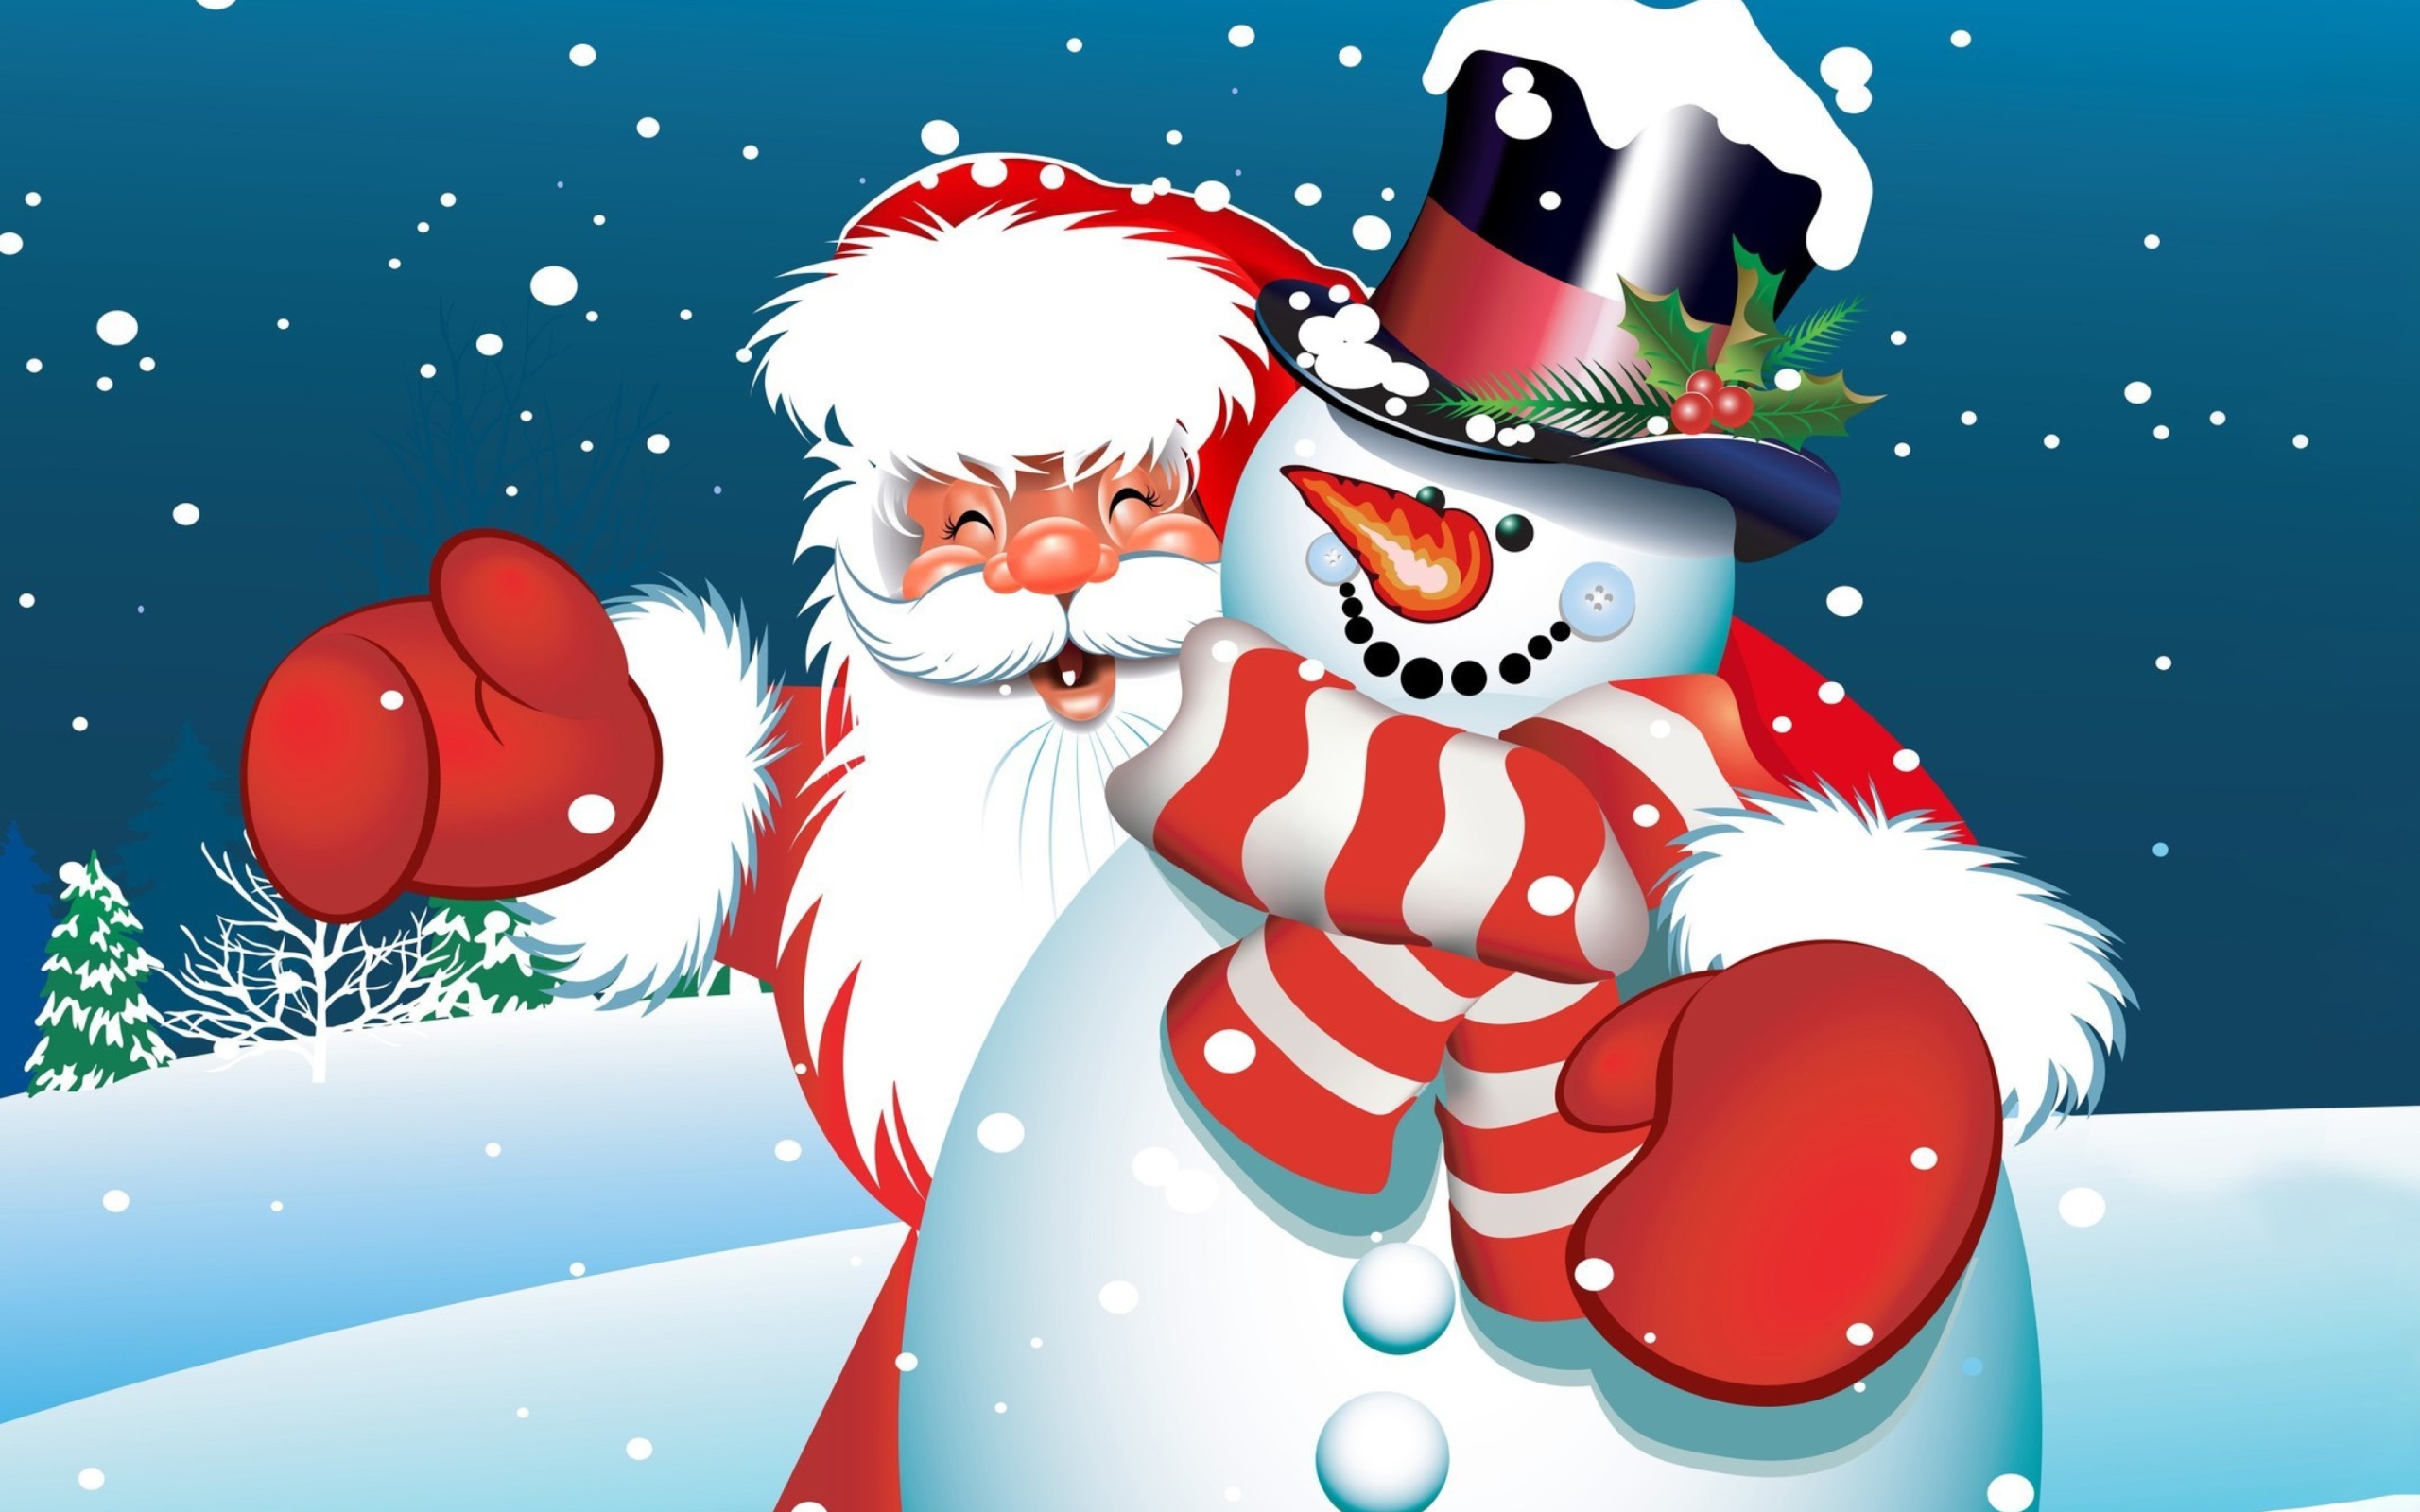 Santa with Snowman wallpaper 2560x1600